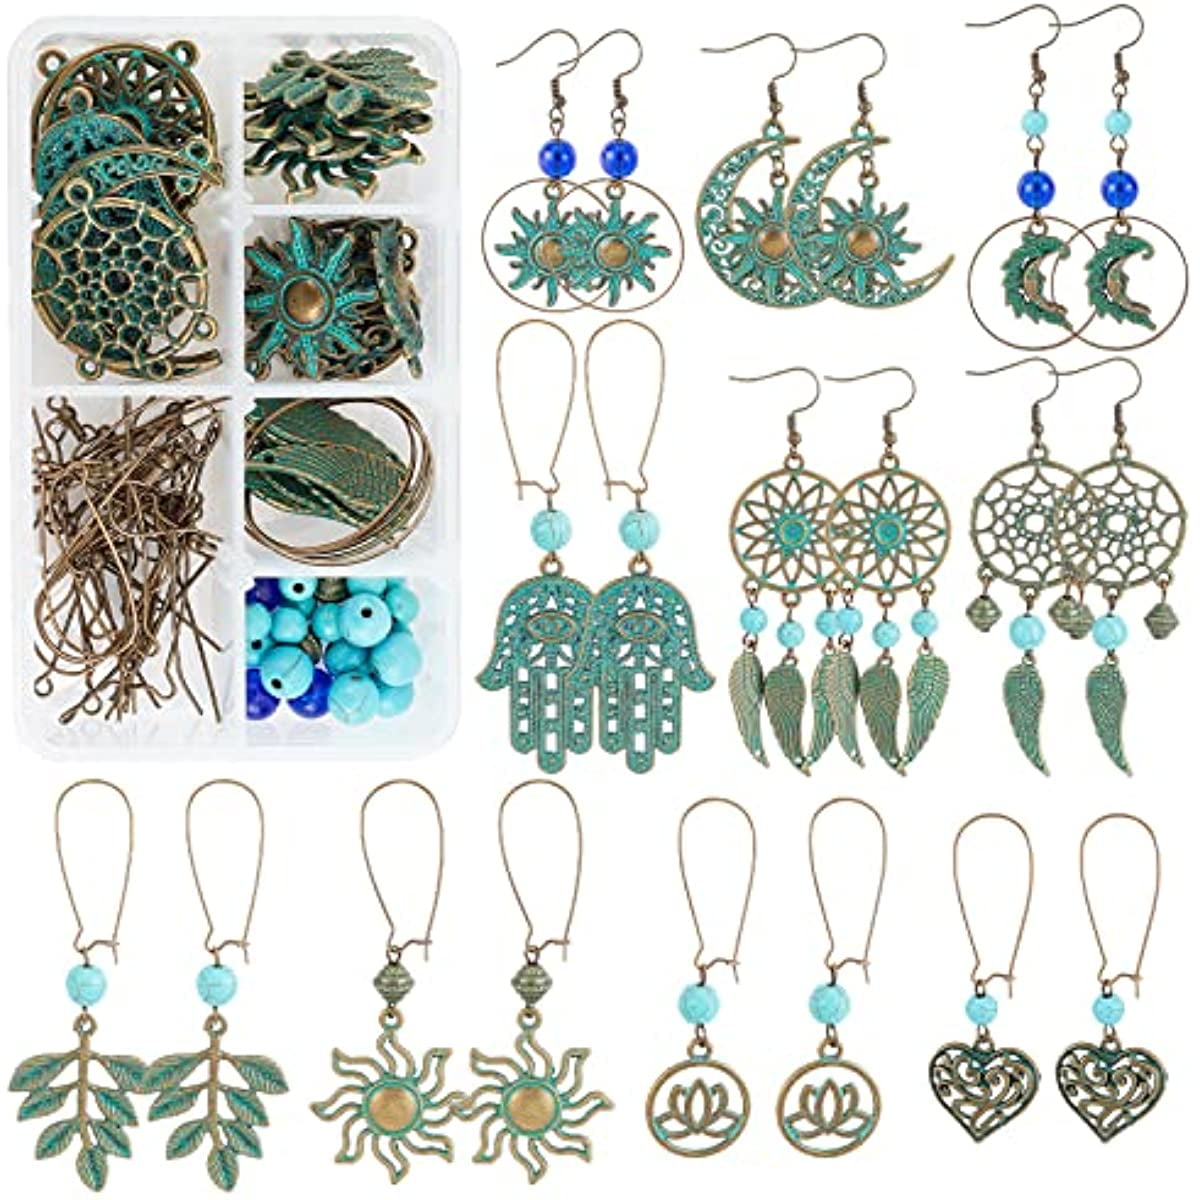 1 Box DIY Make 10 Pairs Bohemian Chandelier Earrings Making Kit Including  Chandelier Links Turquoise Beads Earring Findings for Women Beginners DIY